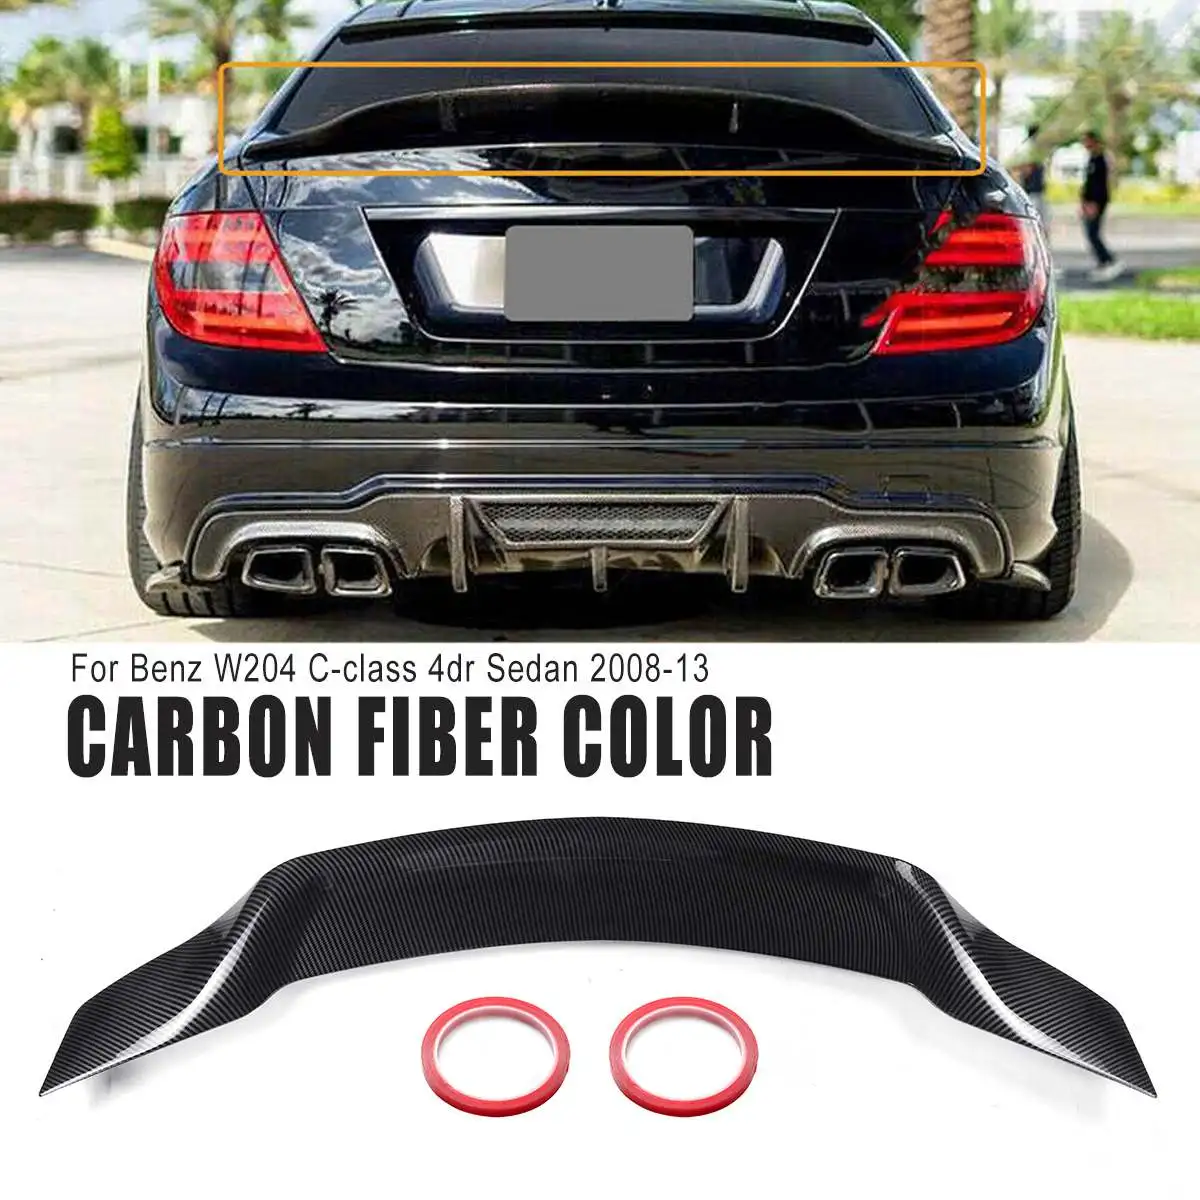 RMAUTO Carbon Fiber Car Rear Trunk Spoiler Lip Wing For Mercedes Benz W204 C Class 2008-2013 Rear Spoiler Car Body Styling Kit